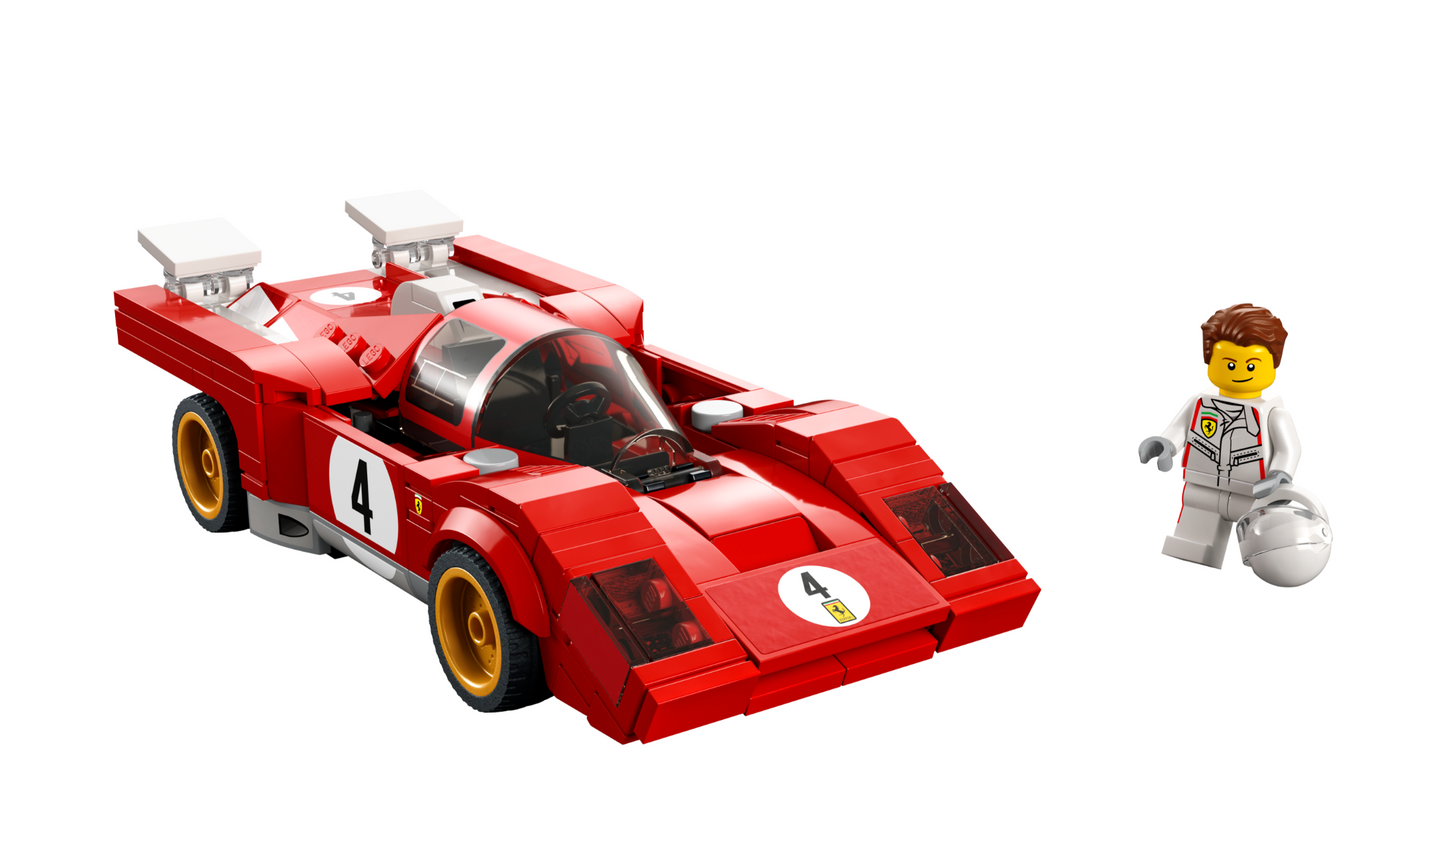 Lego 1970 Ferrari 512 M